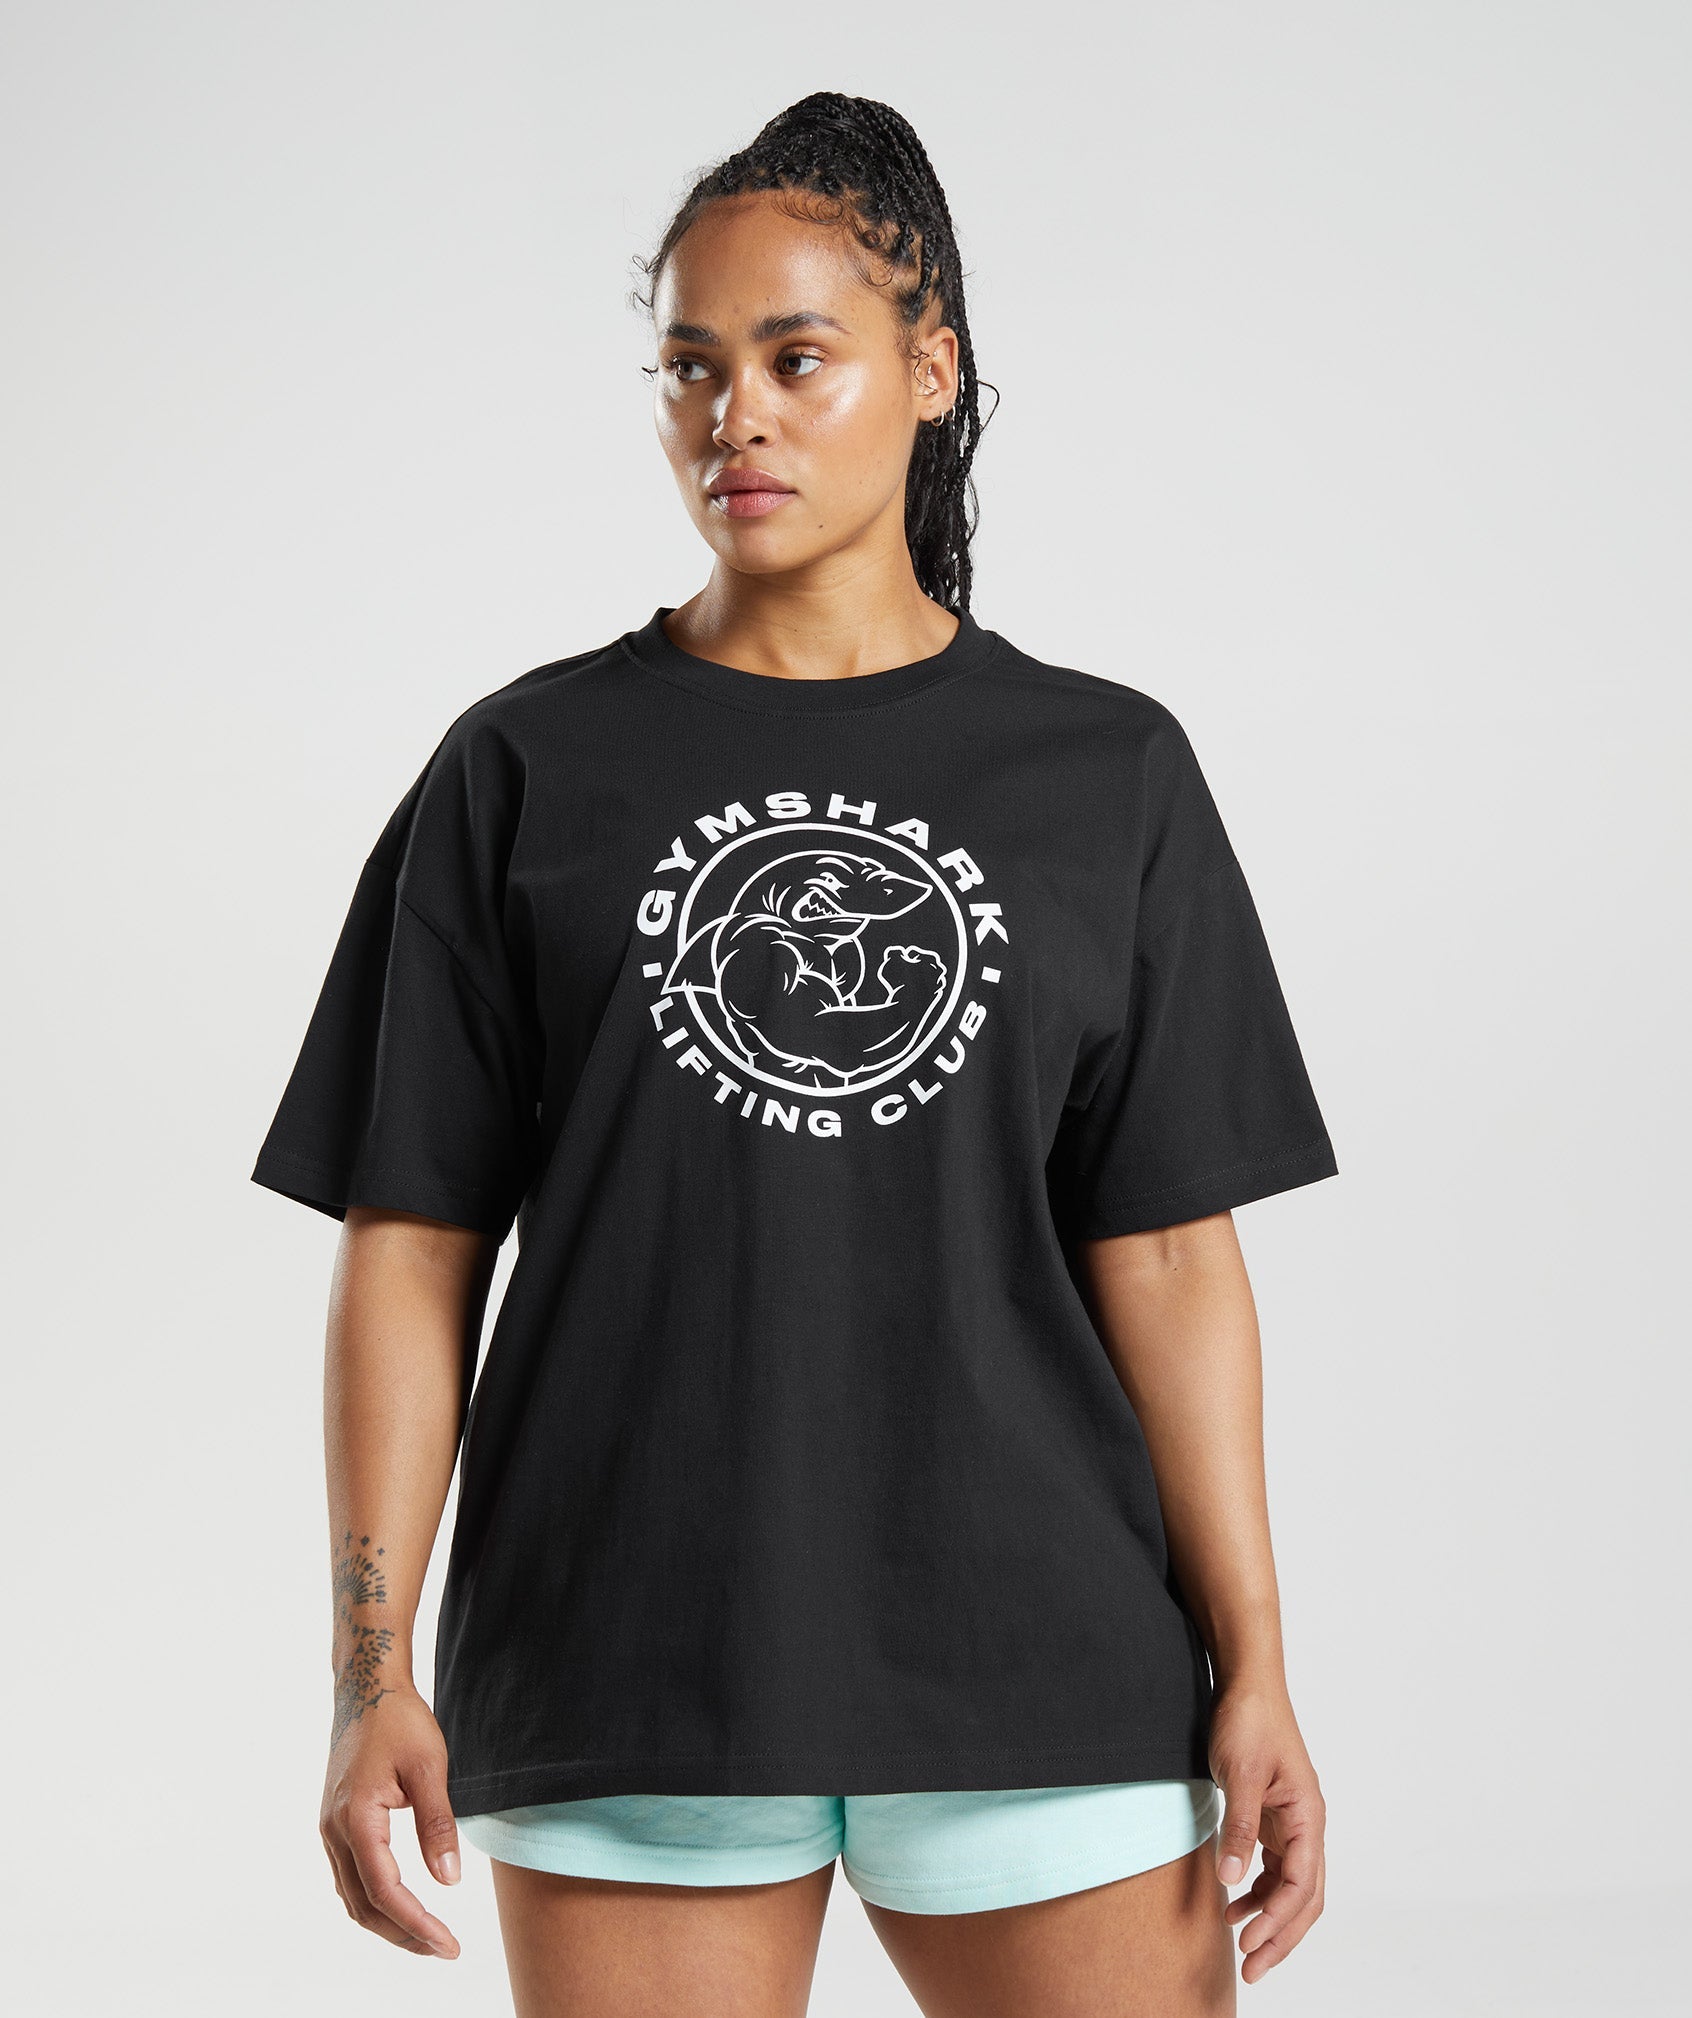 Women's Oversized T Shirts & Baggy T Shirts - Gymshark